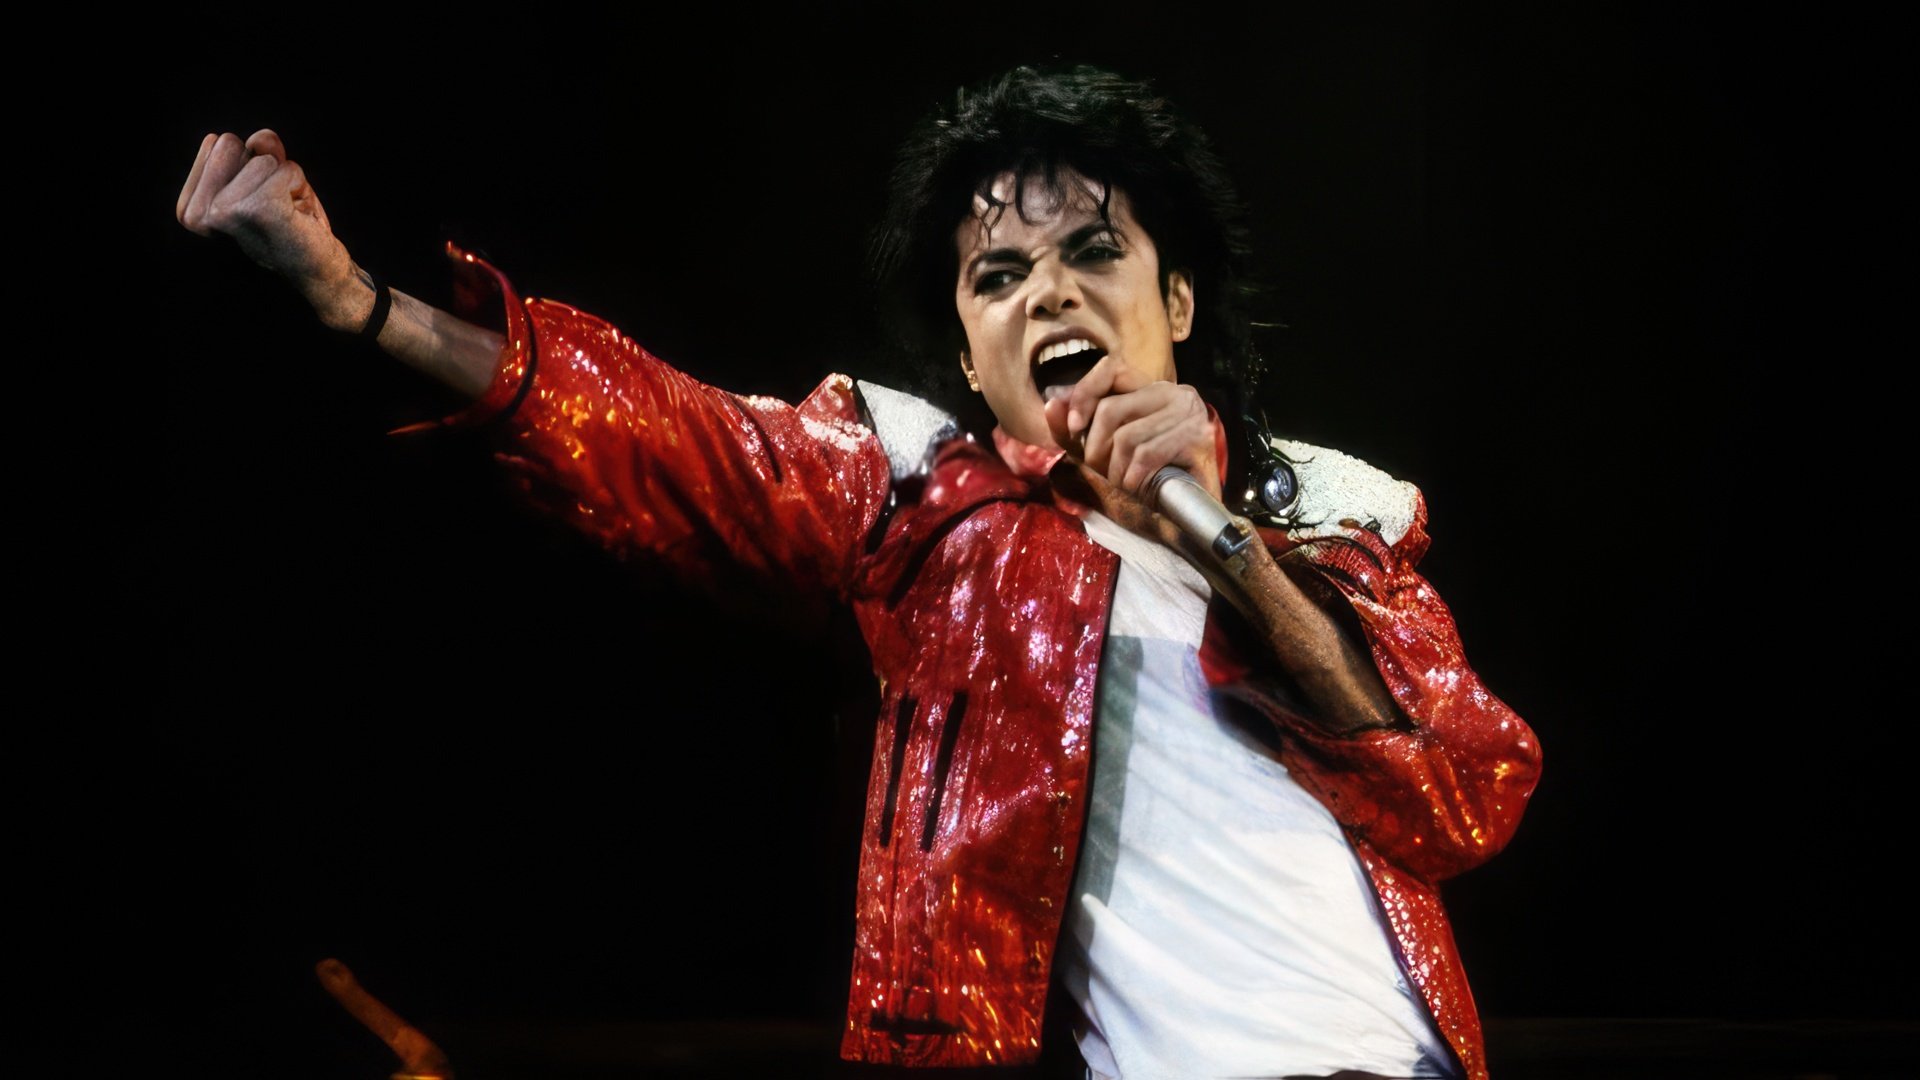 Michael Jackson – The King of Pop